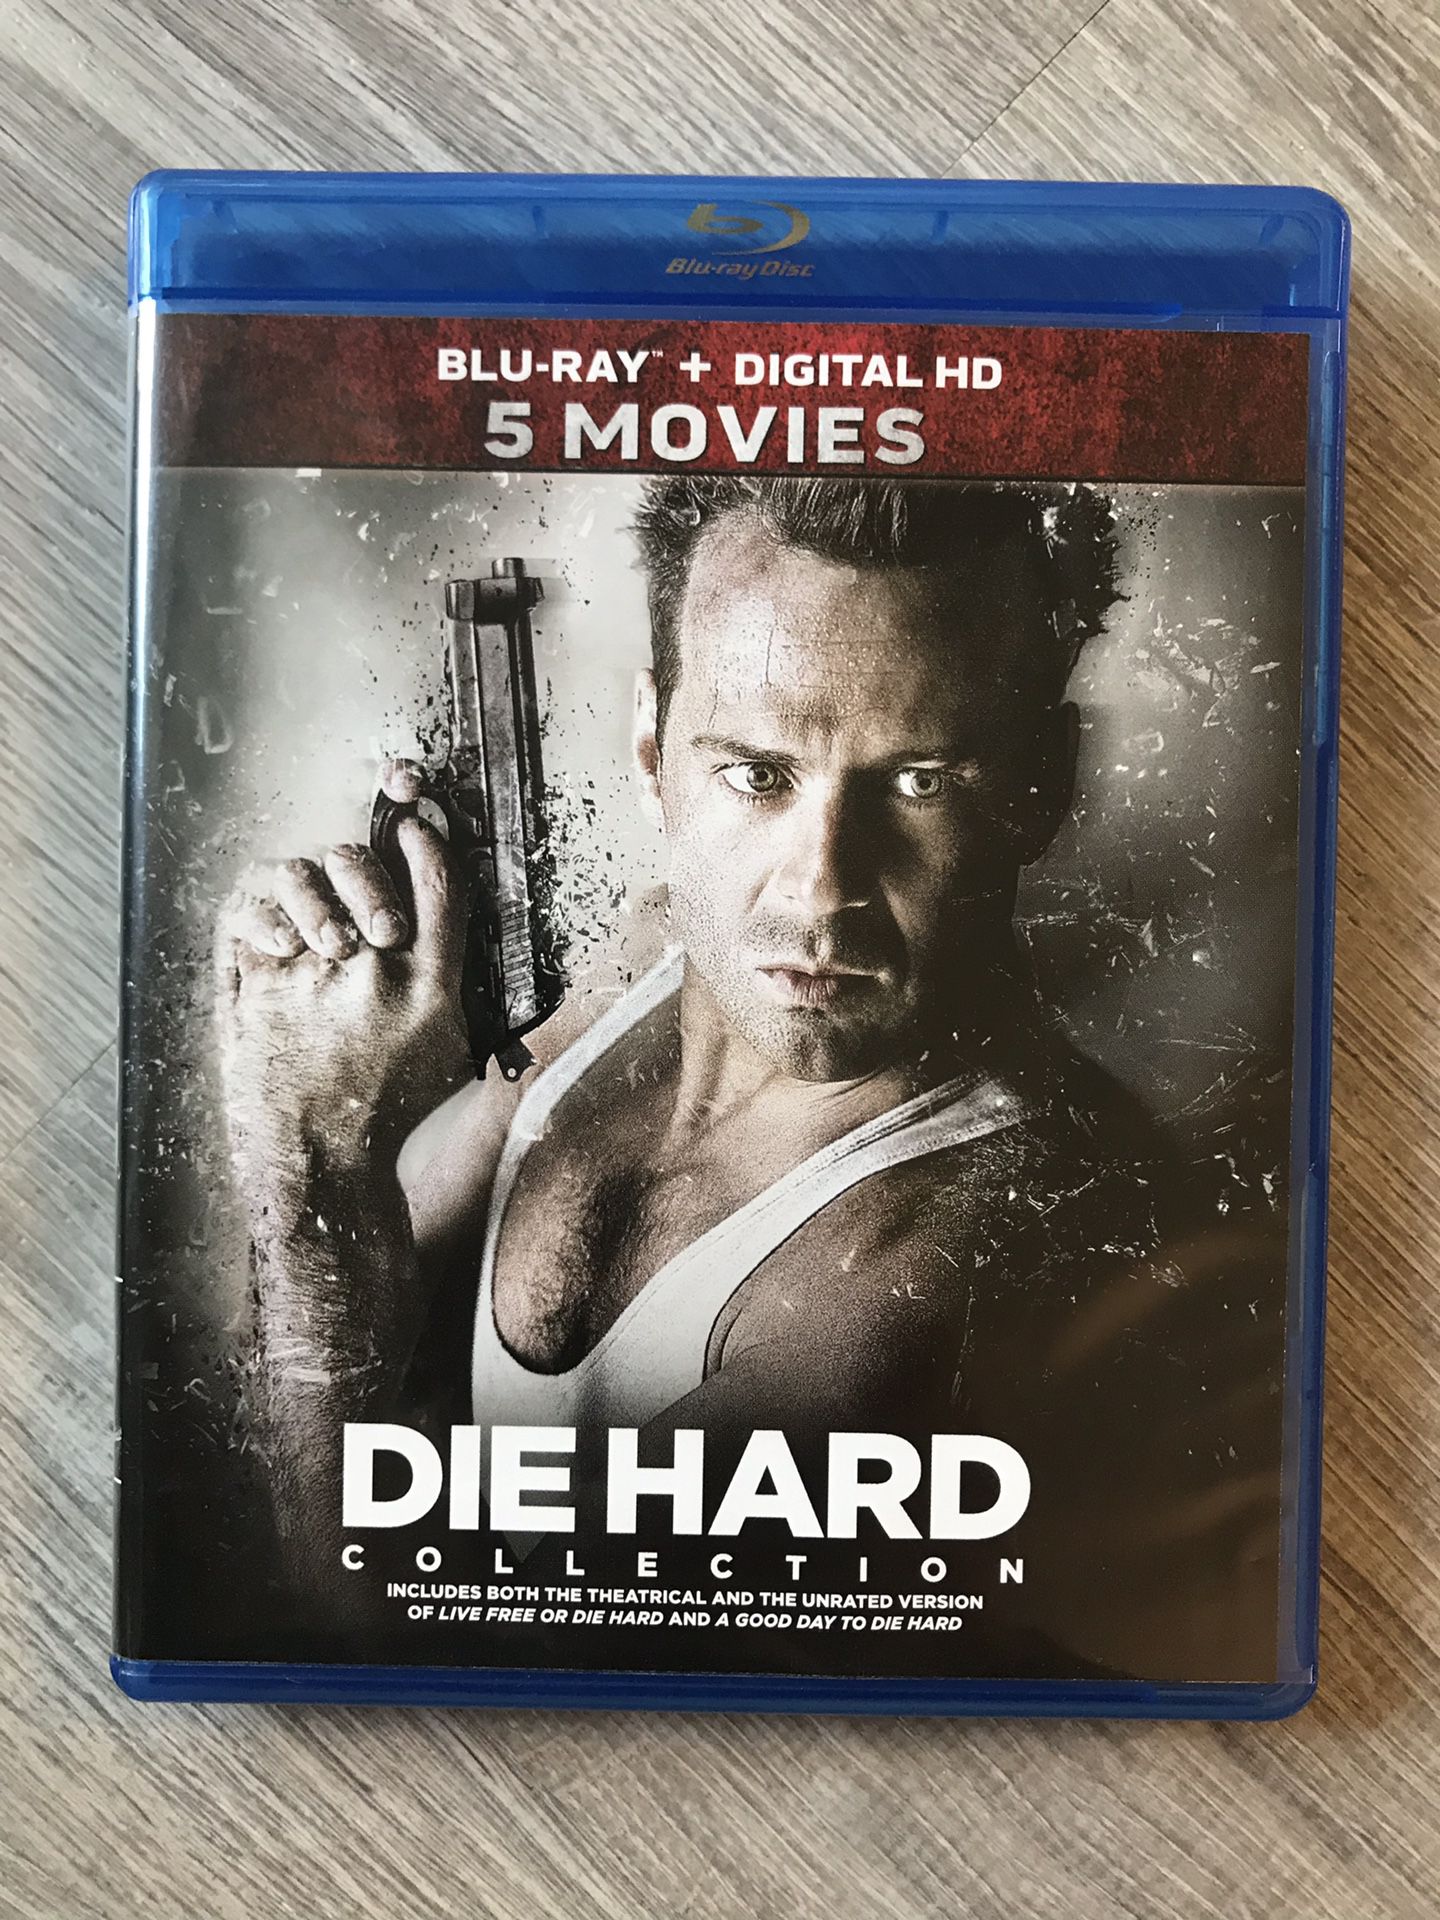 Die Hard 5 movie collection Blu Ray